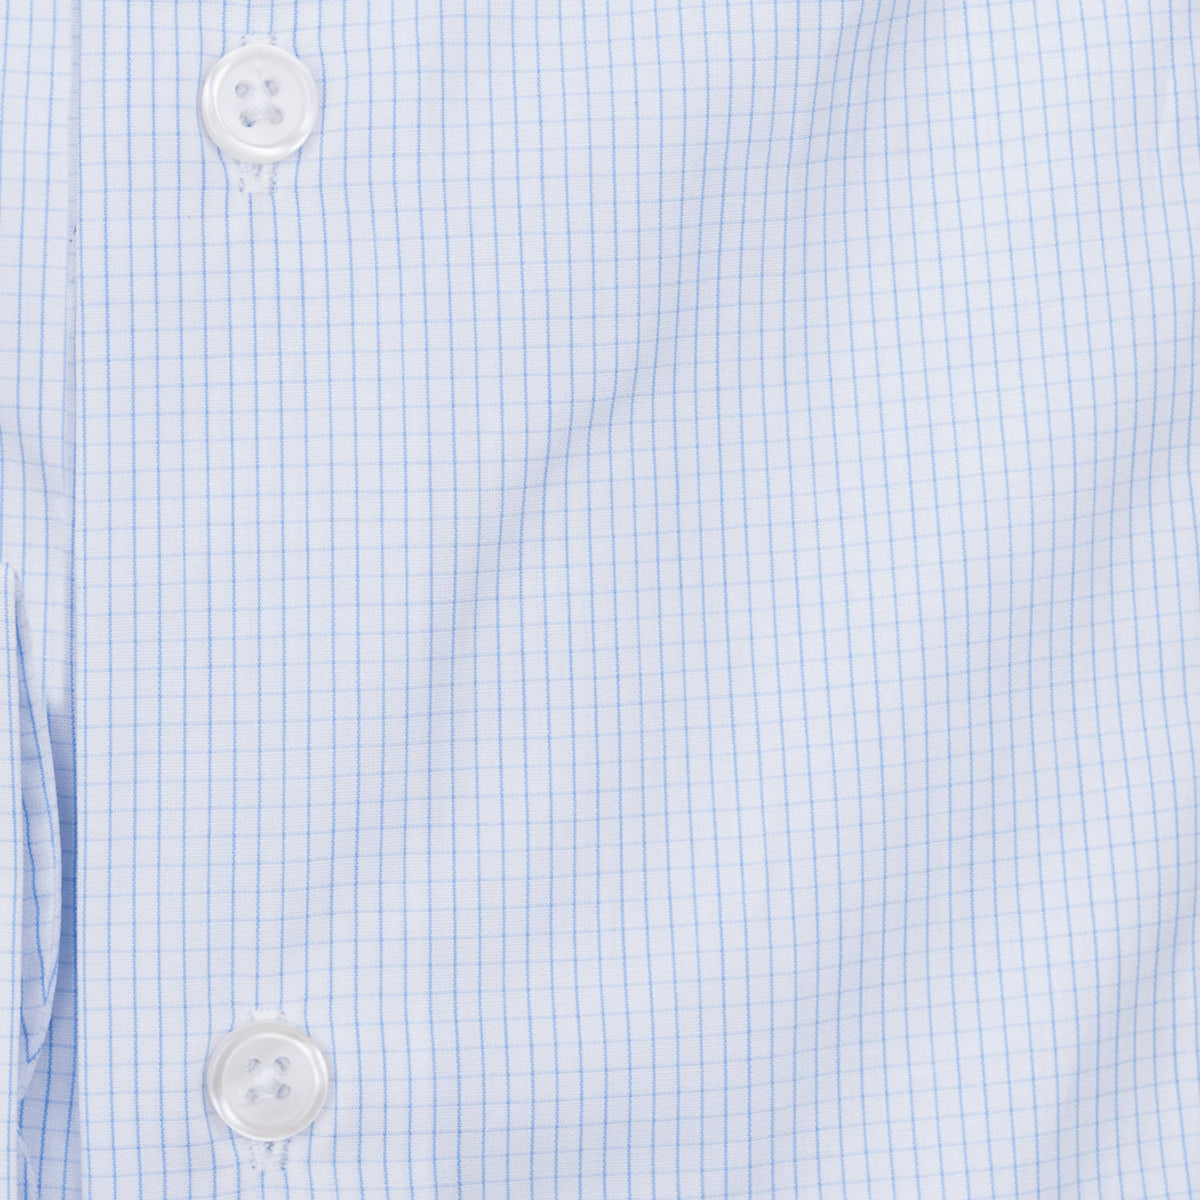 Bespoke - Light Blue Tattersall Tailored Shirt